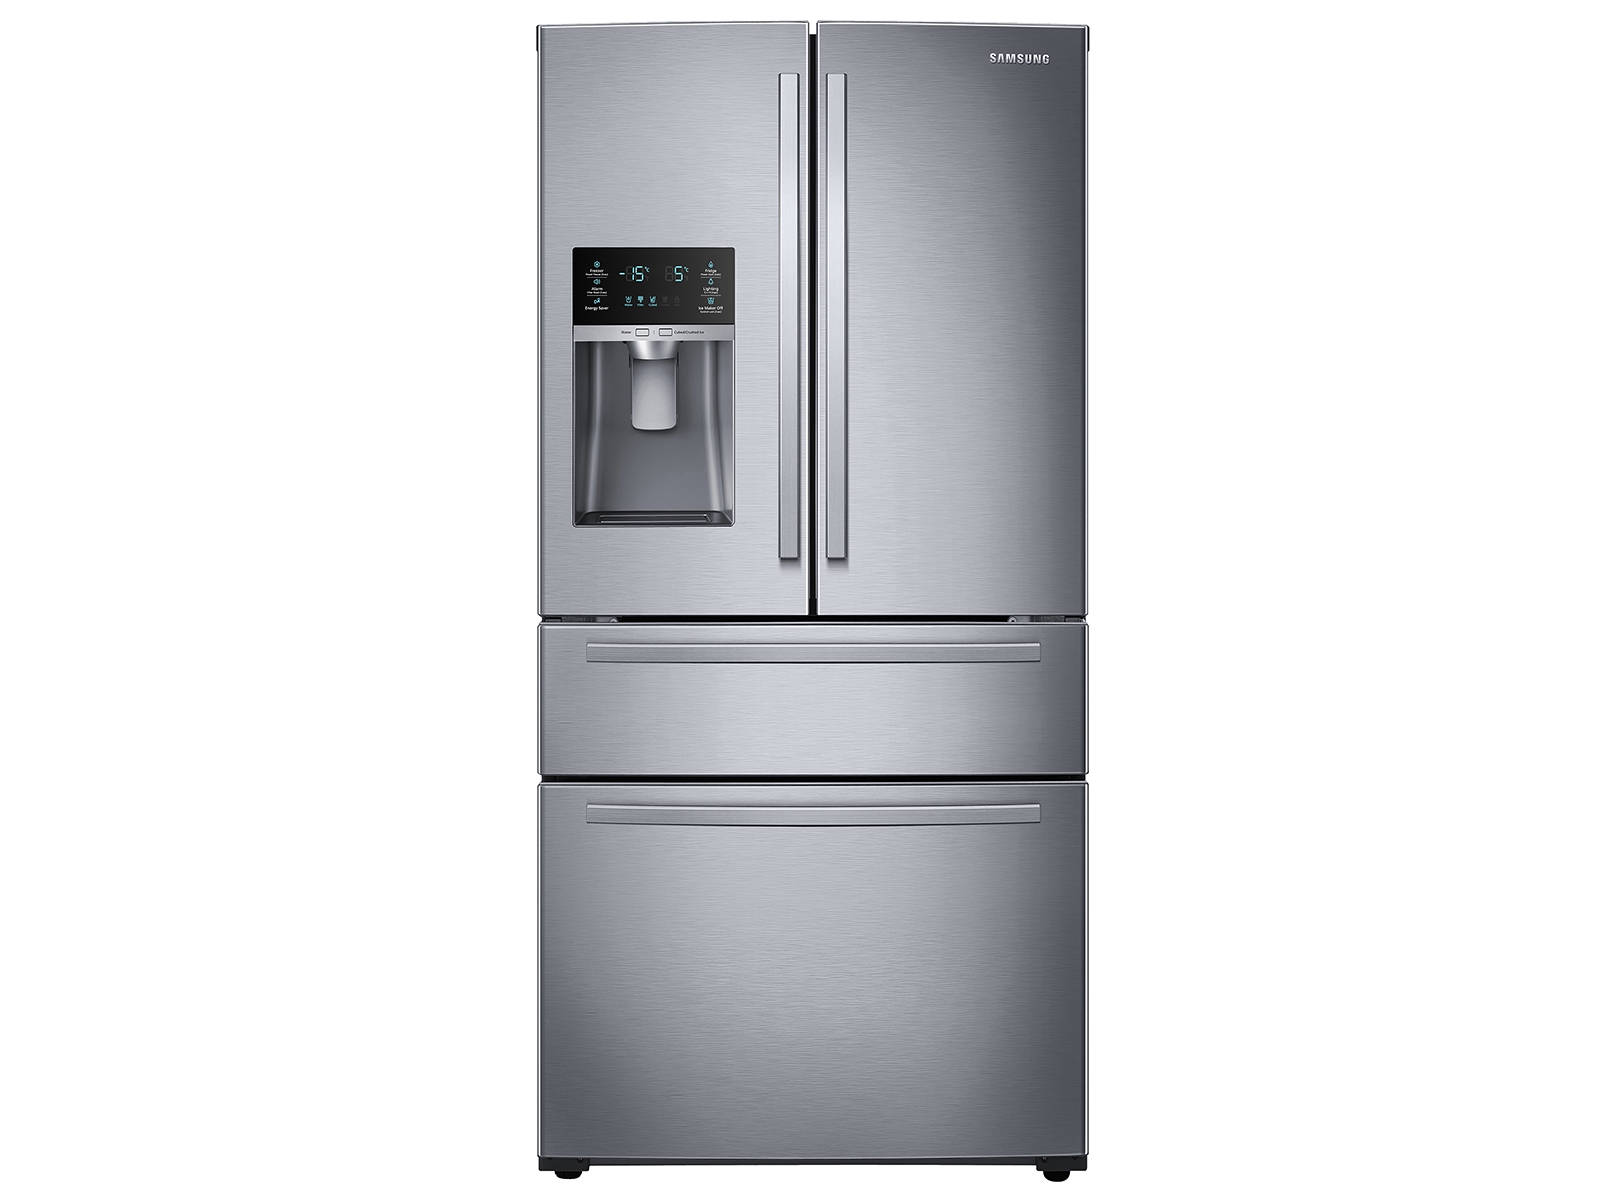 Photos - Fridge Samsung 25 cu. ft. Large Capacity 4-Door French Door Refrigerator with Ext 